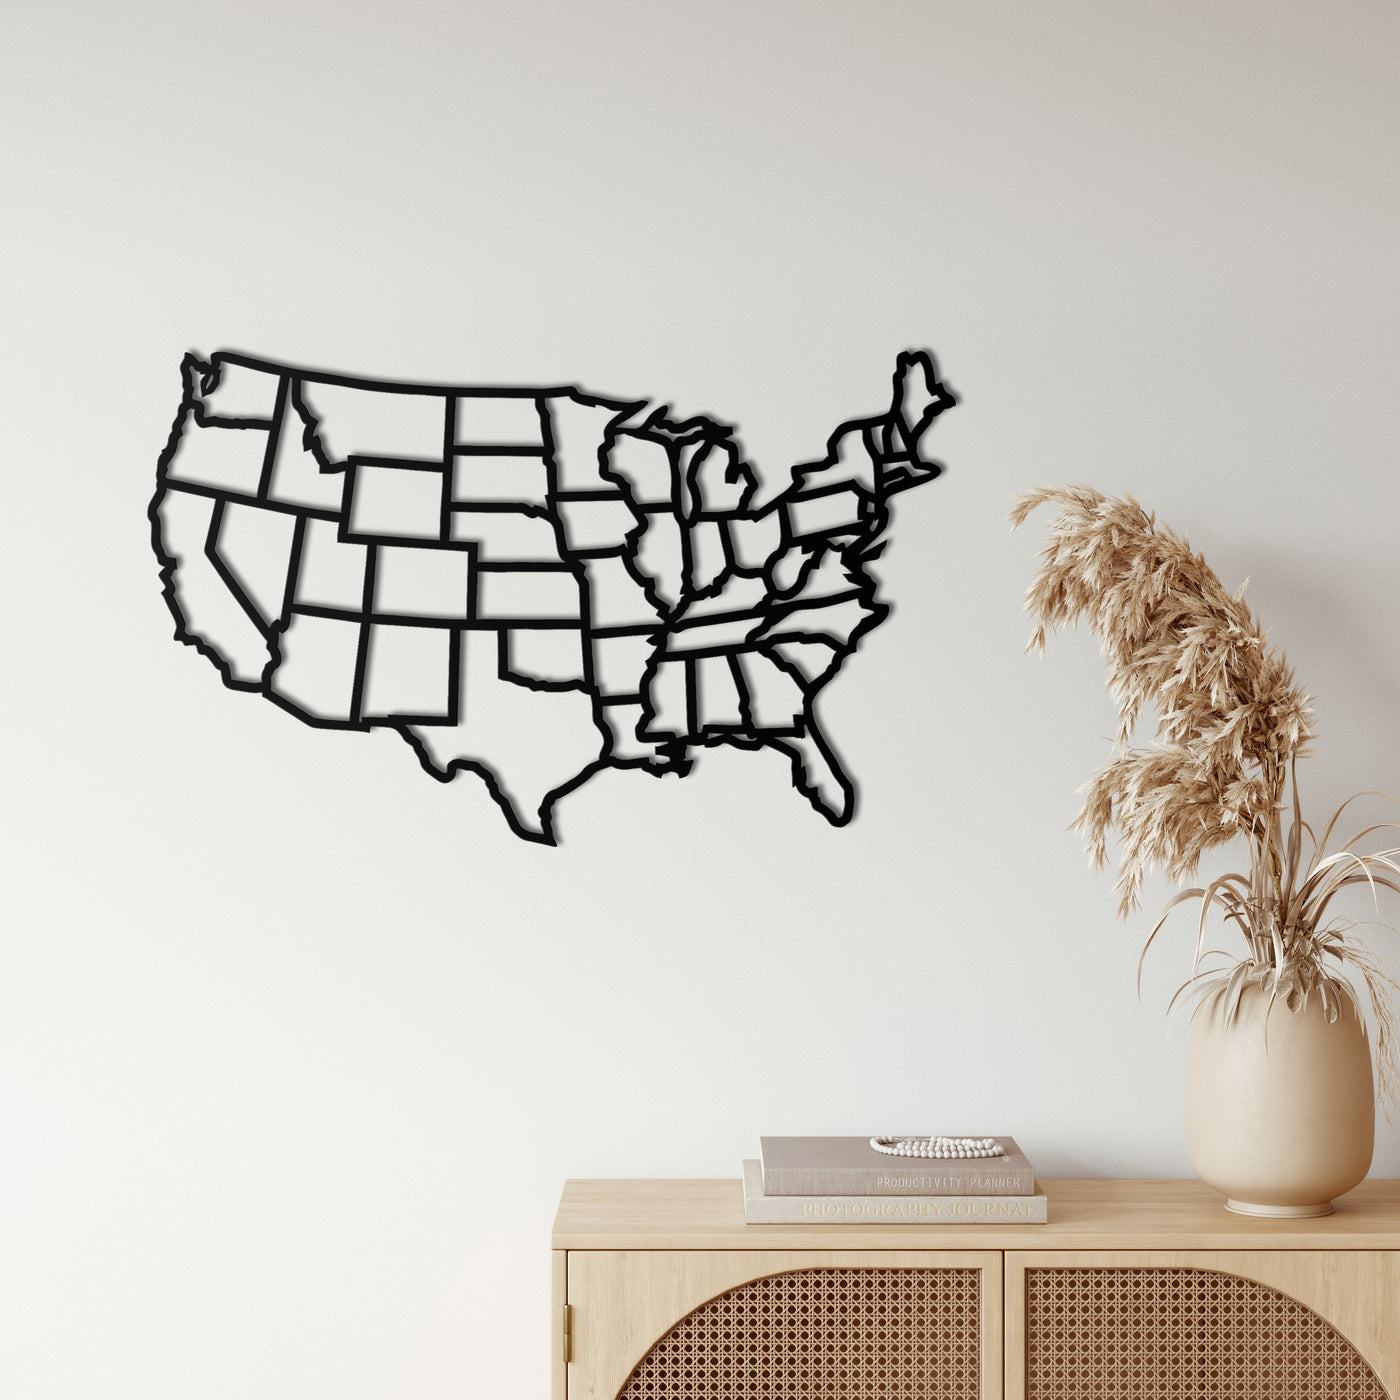 Carte des Etats d'Amérique Art Mural en Métal